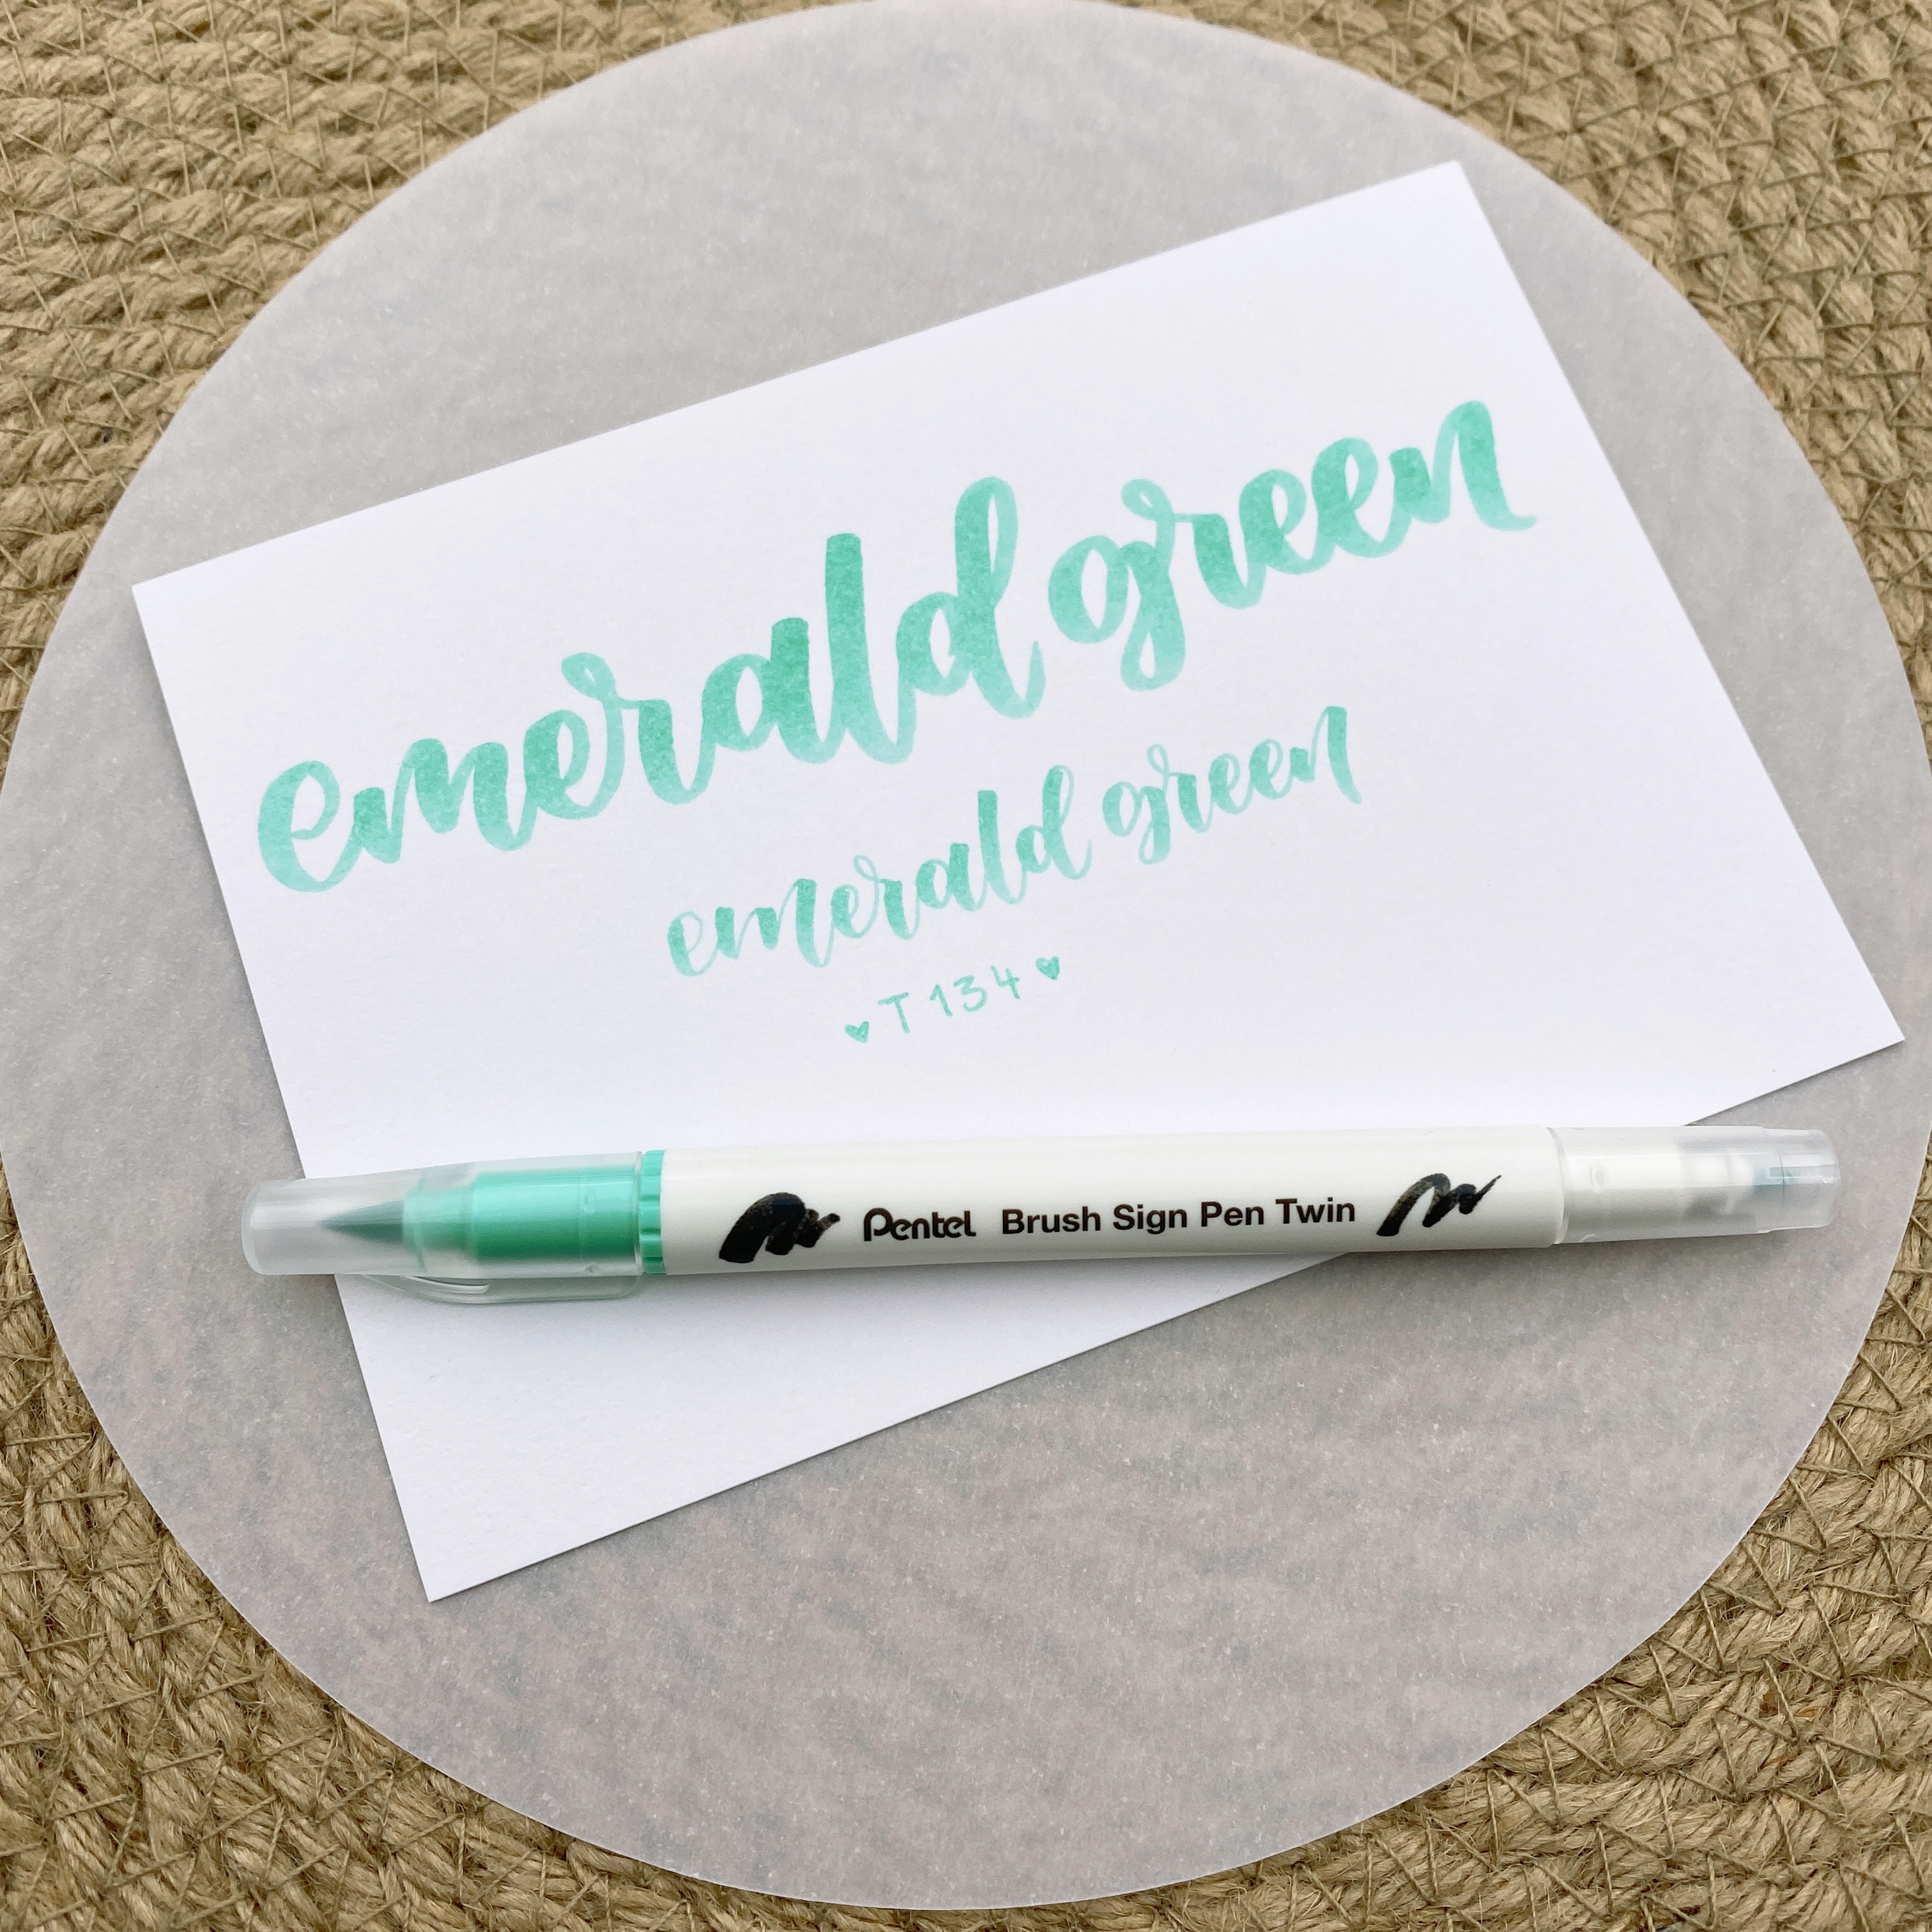 Pentel Brush Sign Pen Twin 134 Emerald Green